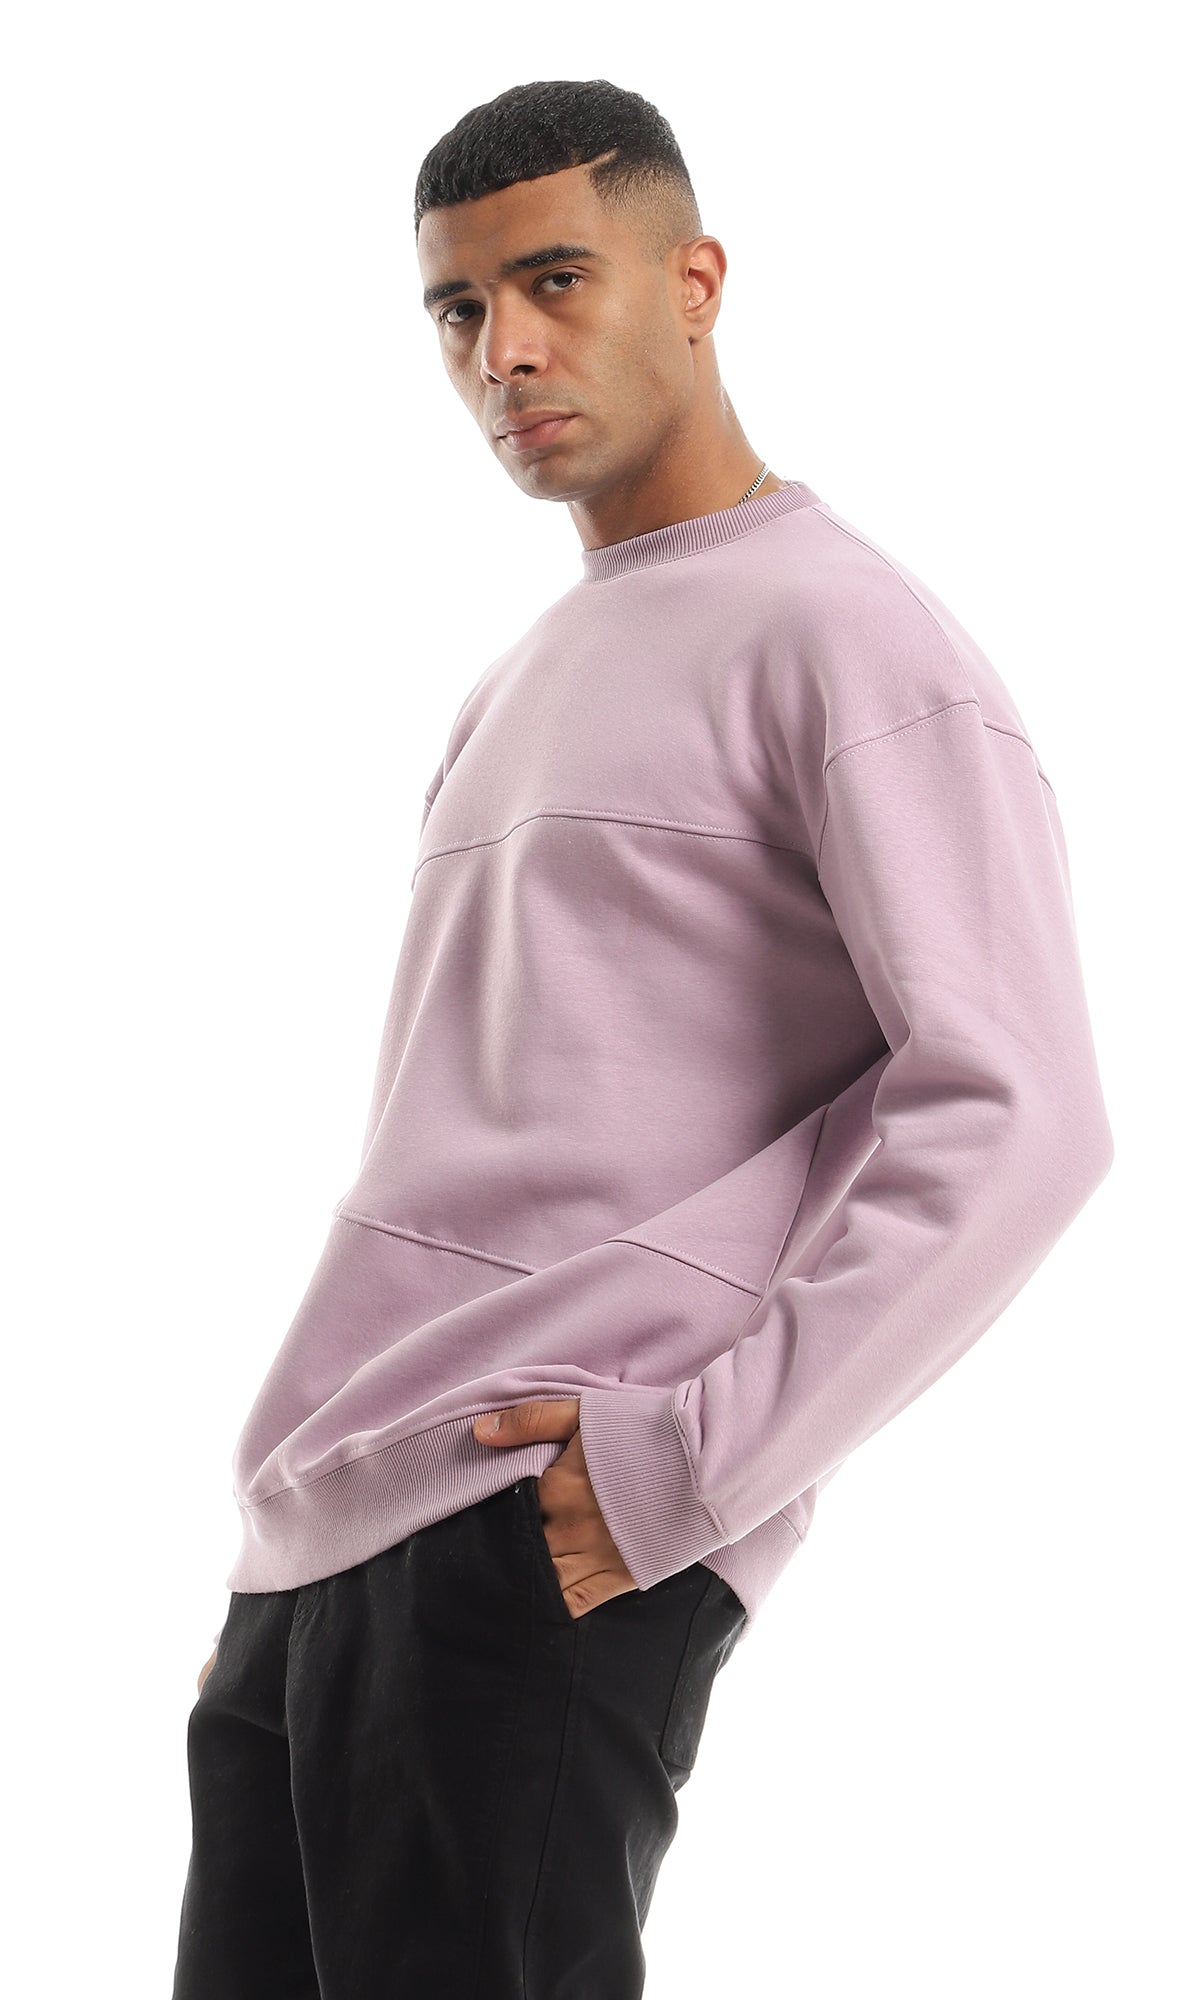 O151235 Light Lavender Stitched Pattern Soft Fleece Sweatshirt